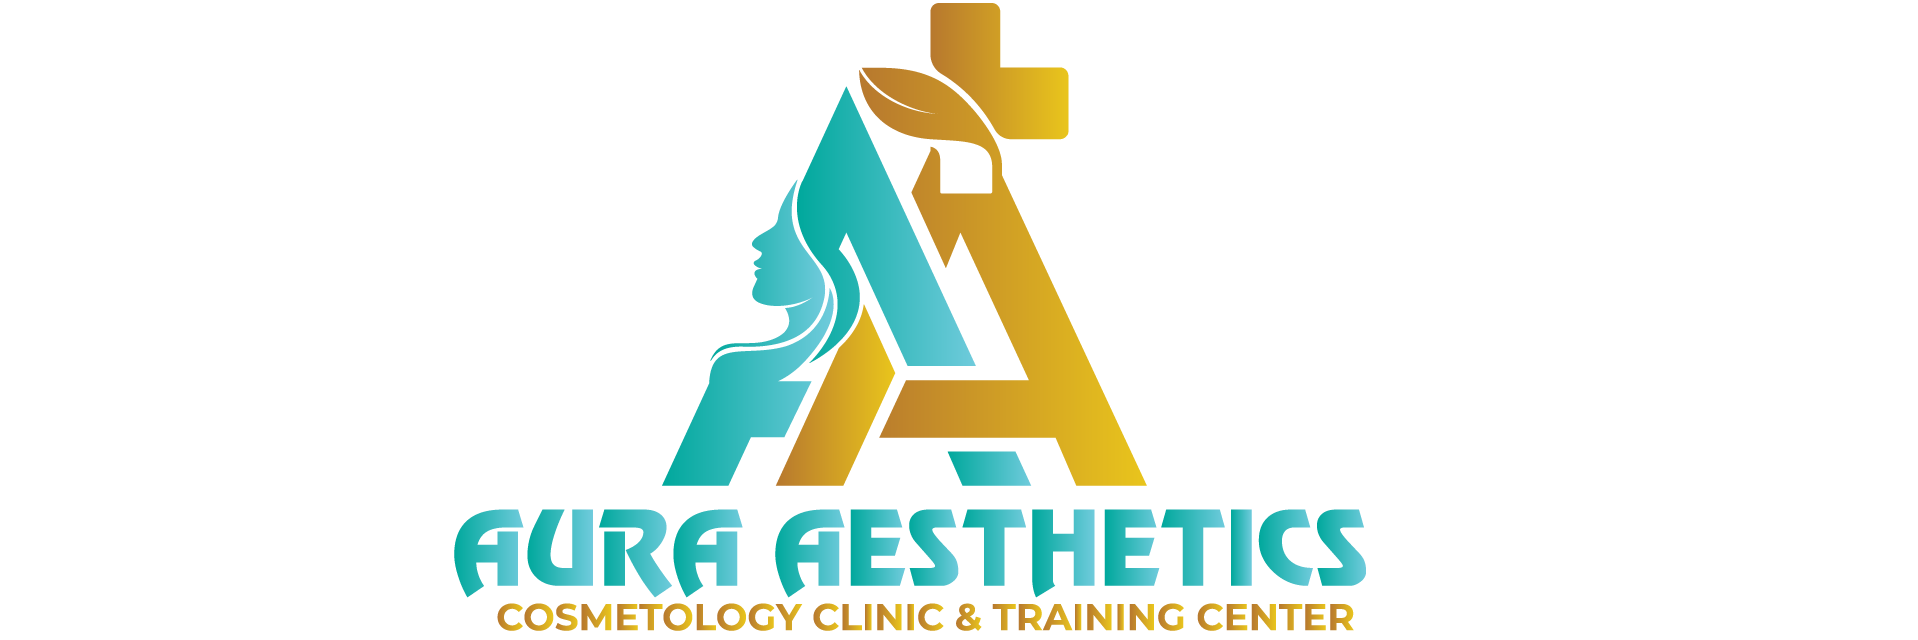 AURA AESTHETICS COSMETOLOGY CLINIC & TRAINING CENTER